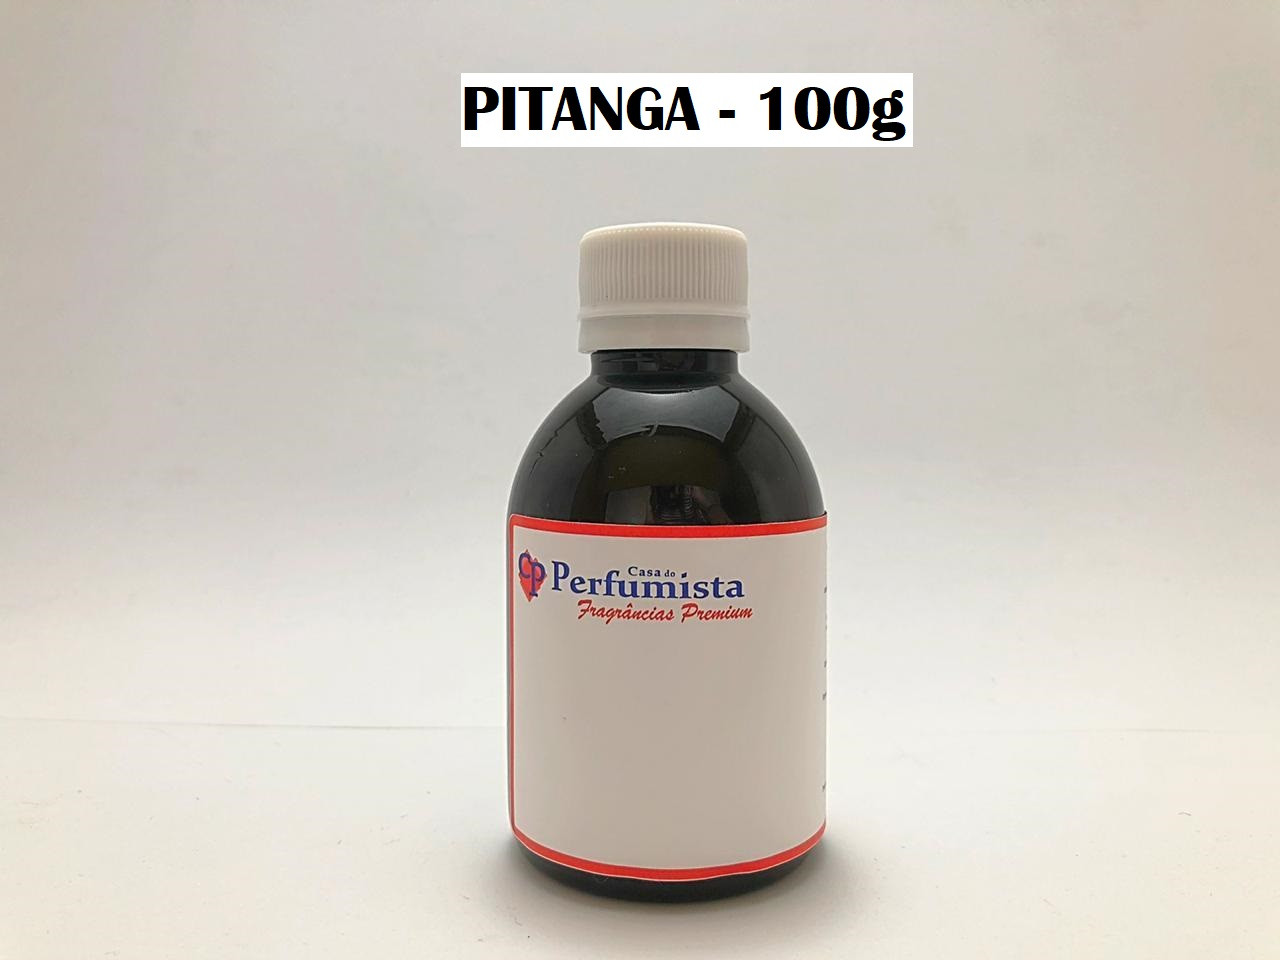 PITANGA - 100g